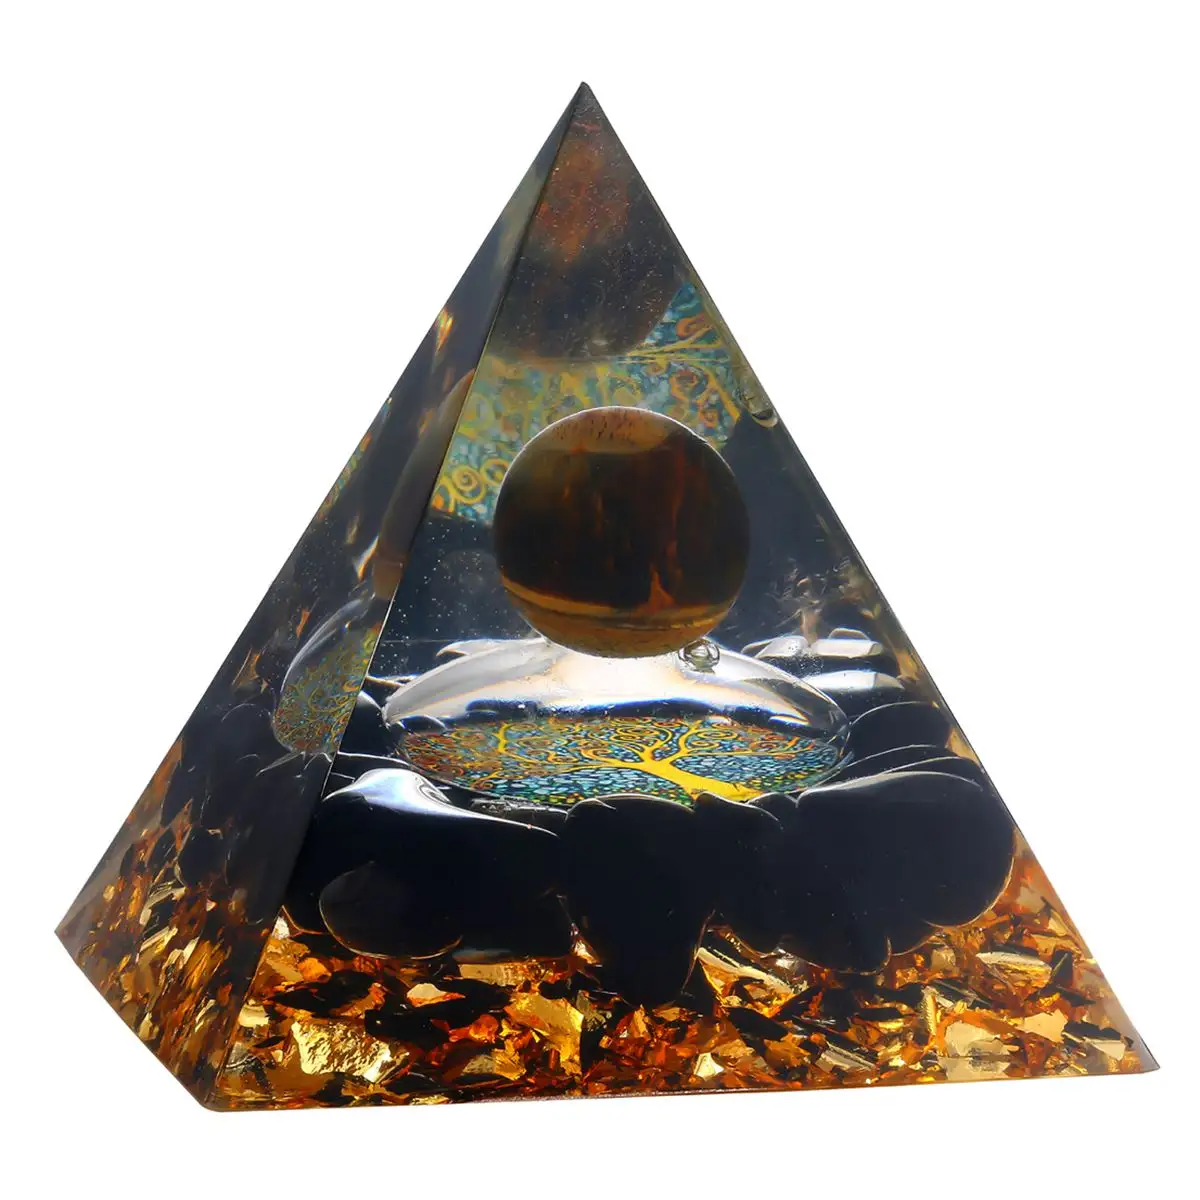 Wholesale 60mm Meditation Pyramid Energy Healing Tumbled Stone Natural Stone Seven Chakras